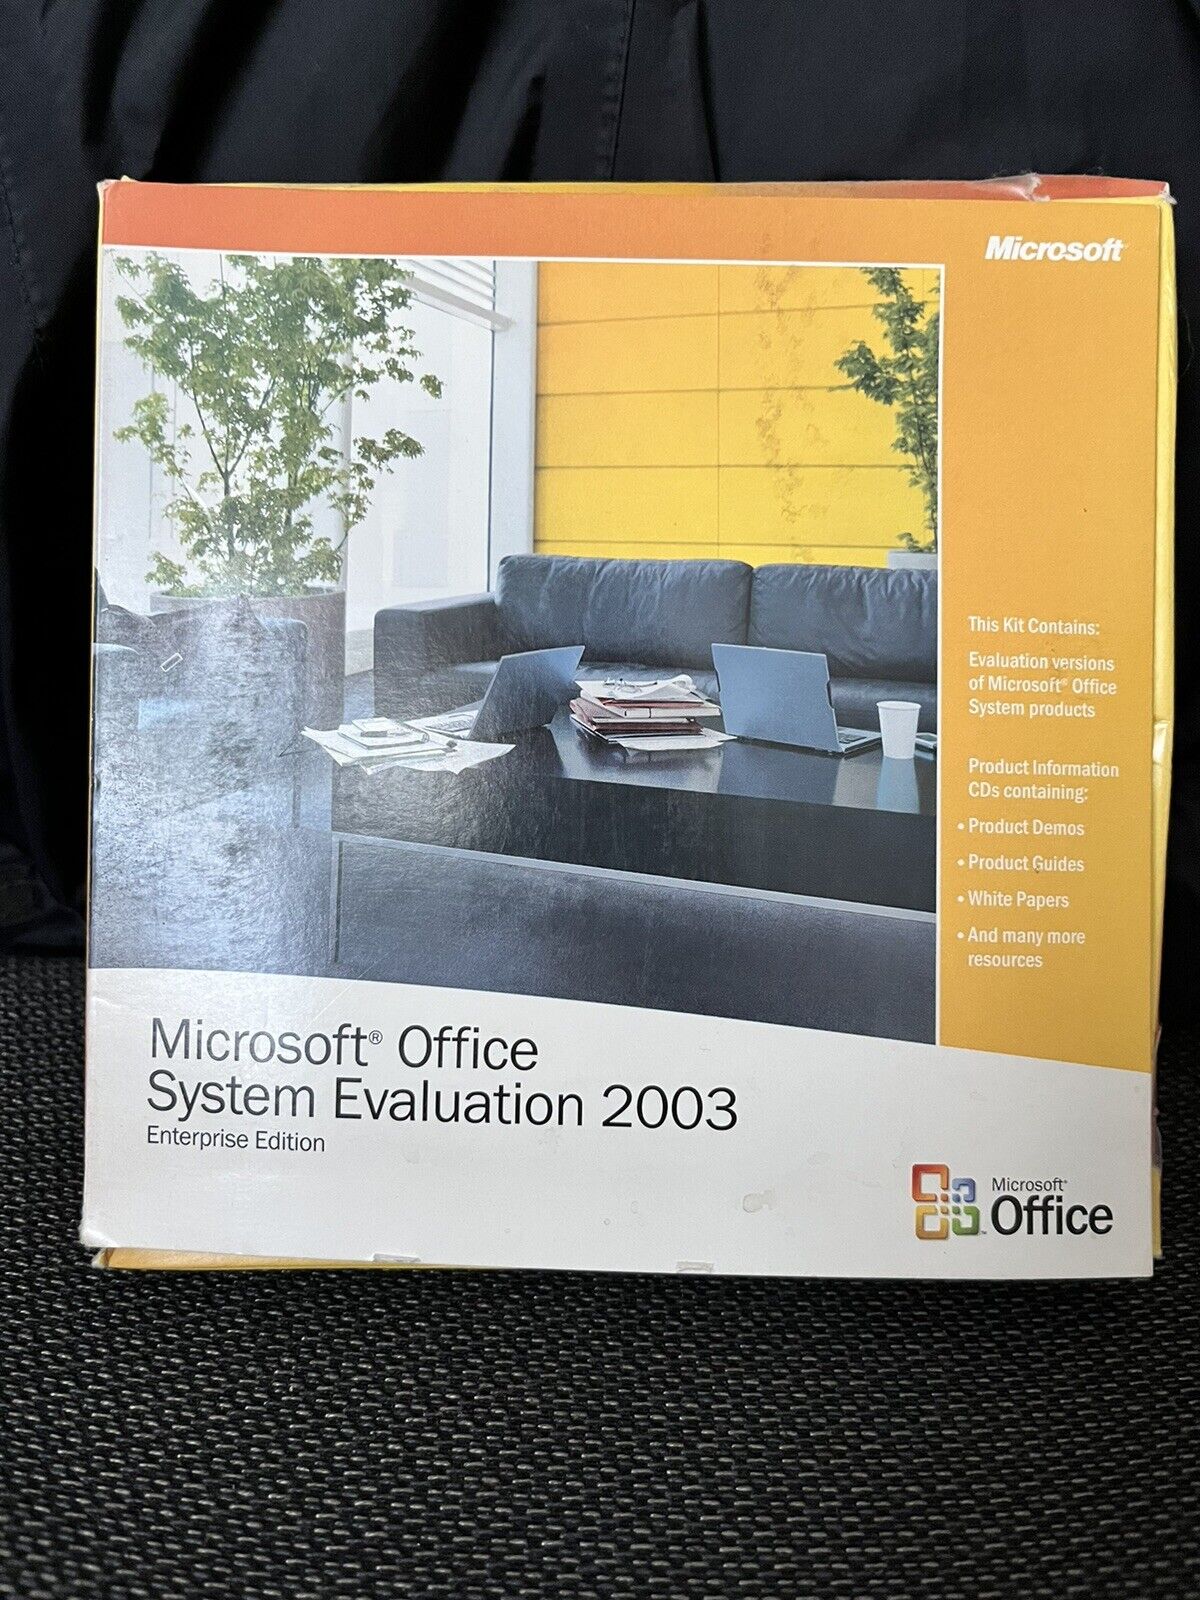 Microsoft Office System Evaluation 2003 Enterprise Edition, 15 CD's